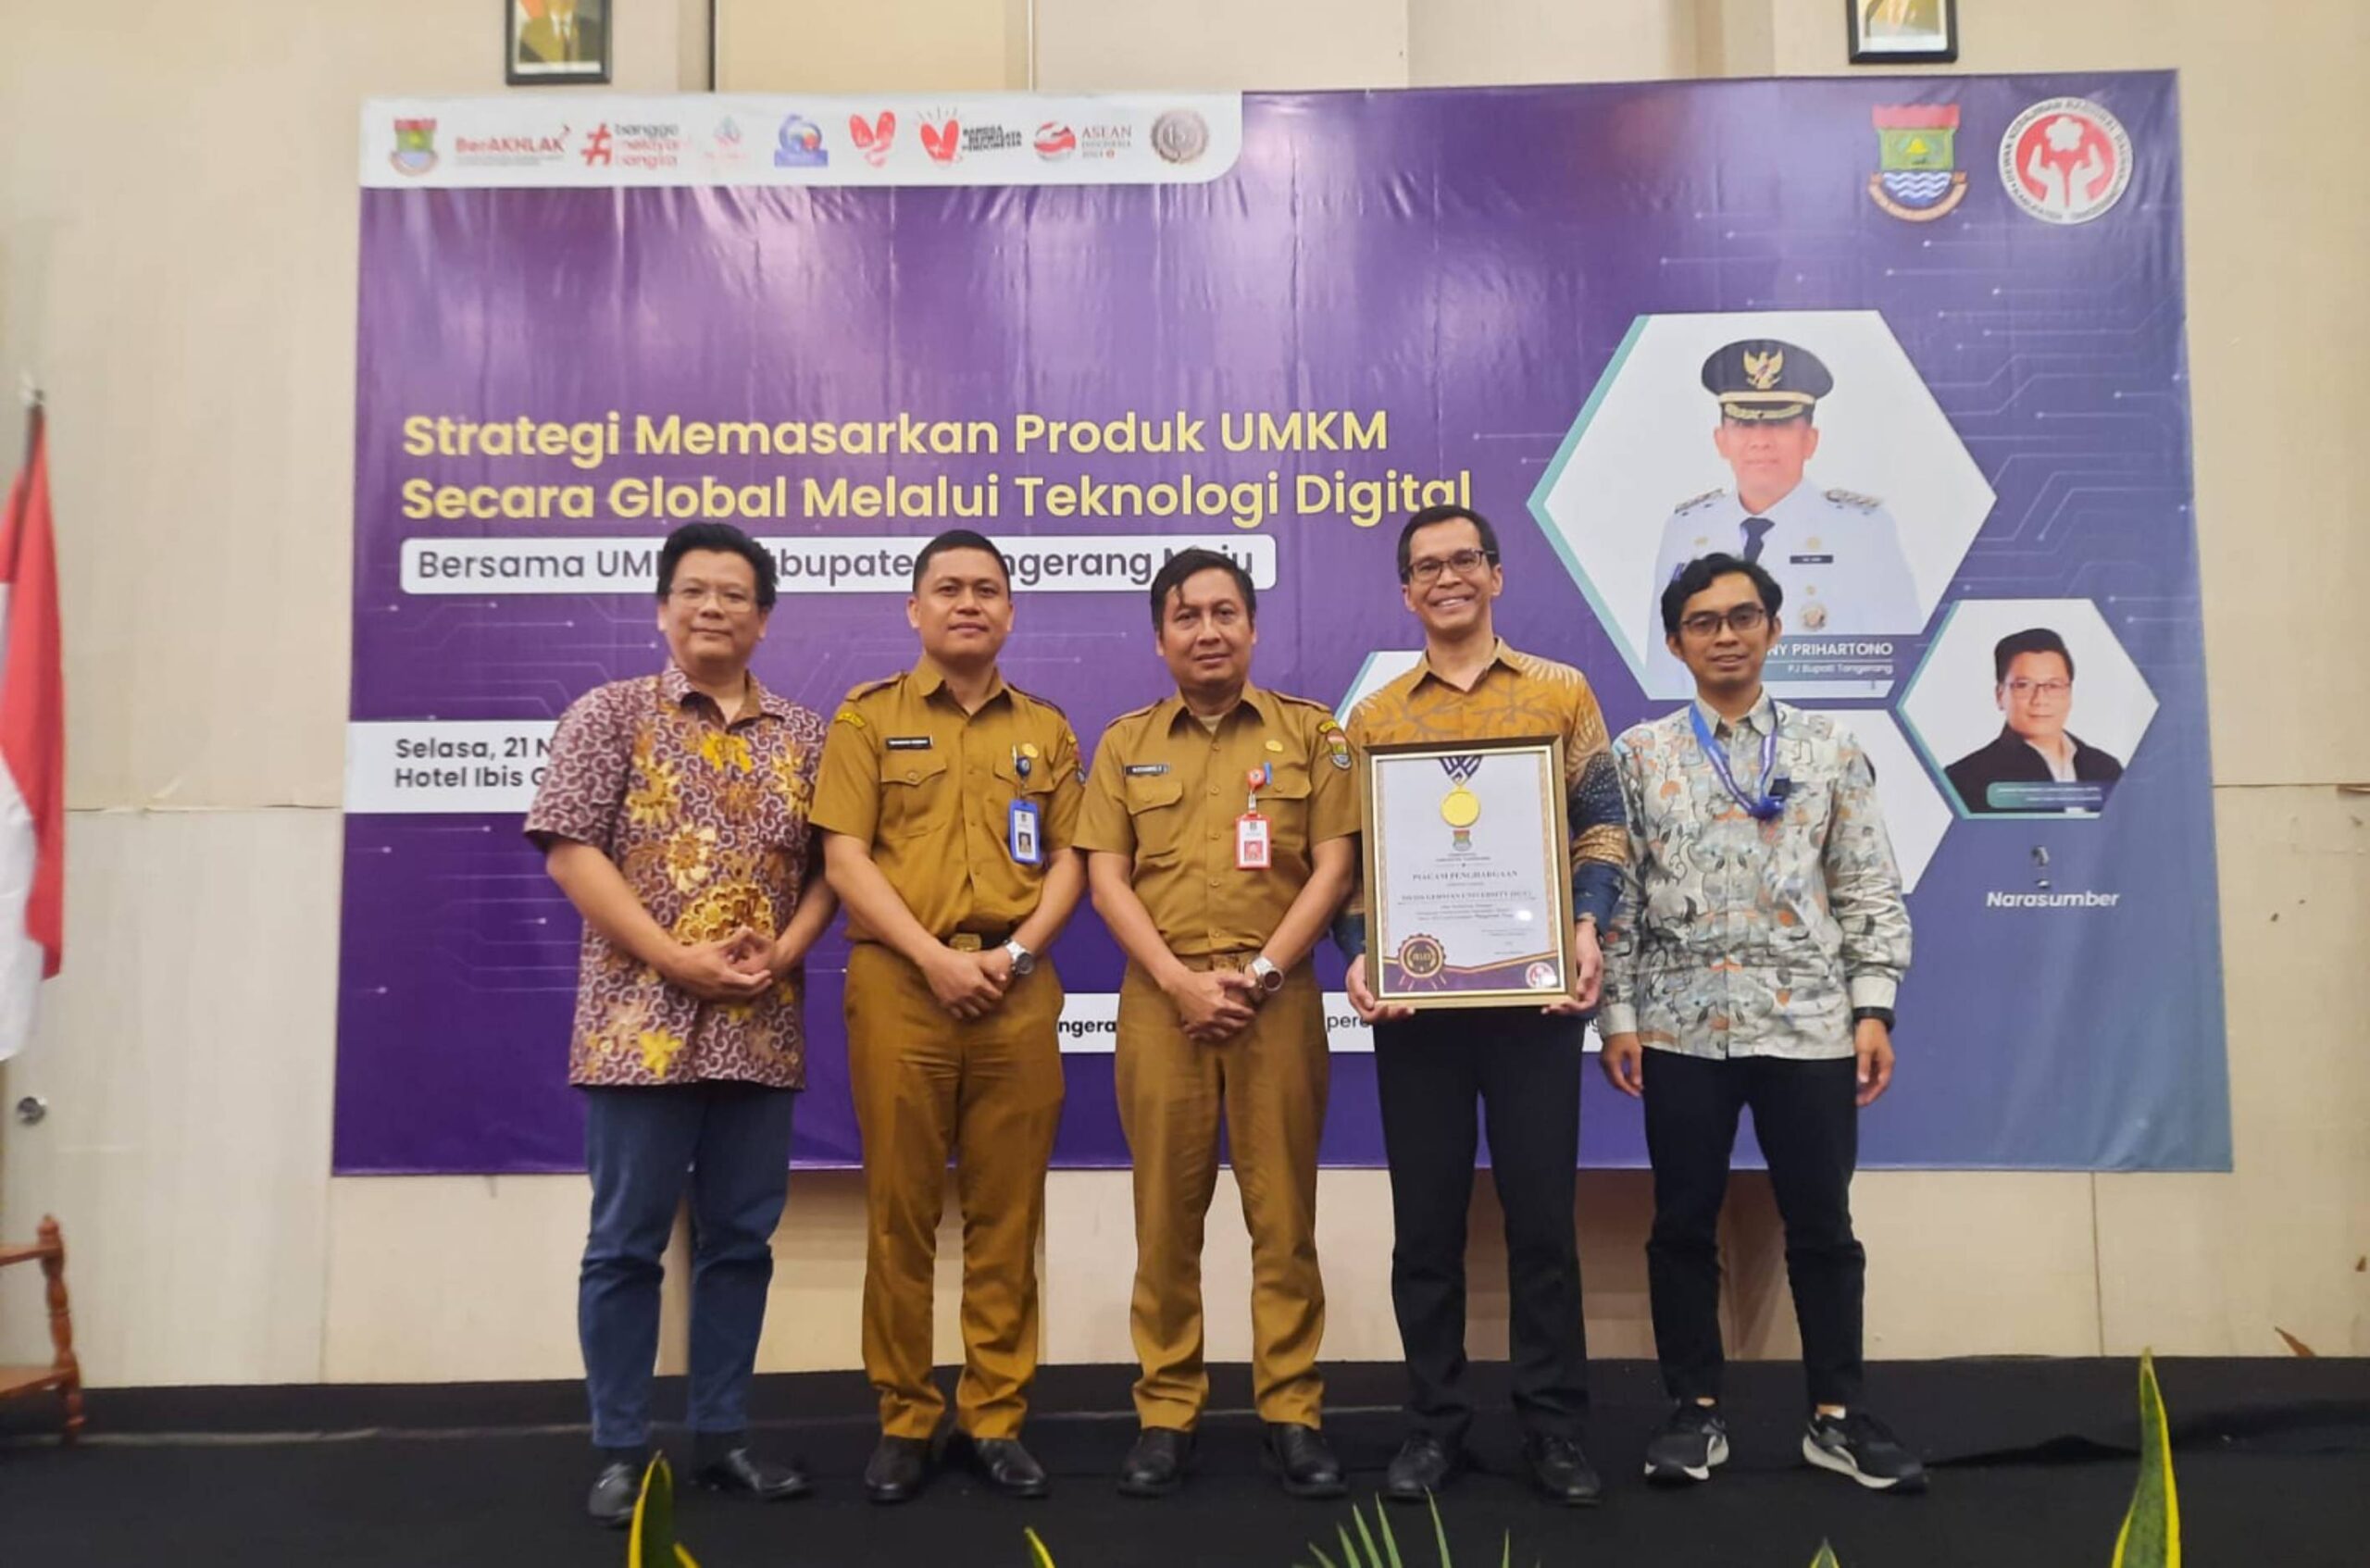 SGU Receives Prestigious Award for Economic Catalyst Role in Tangerang Regency